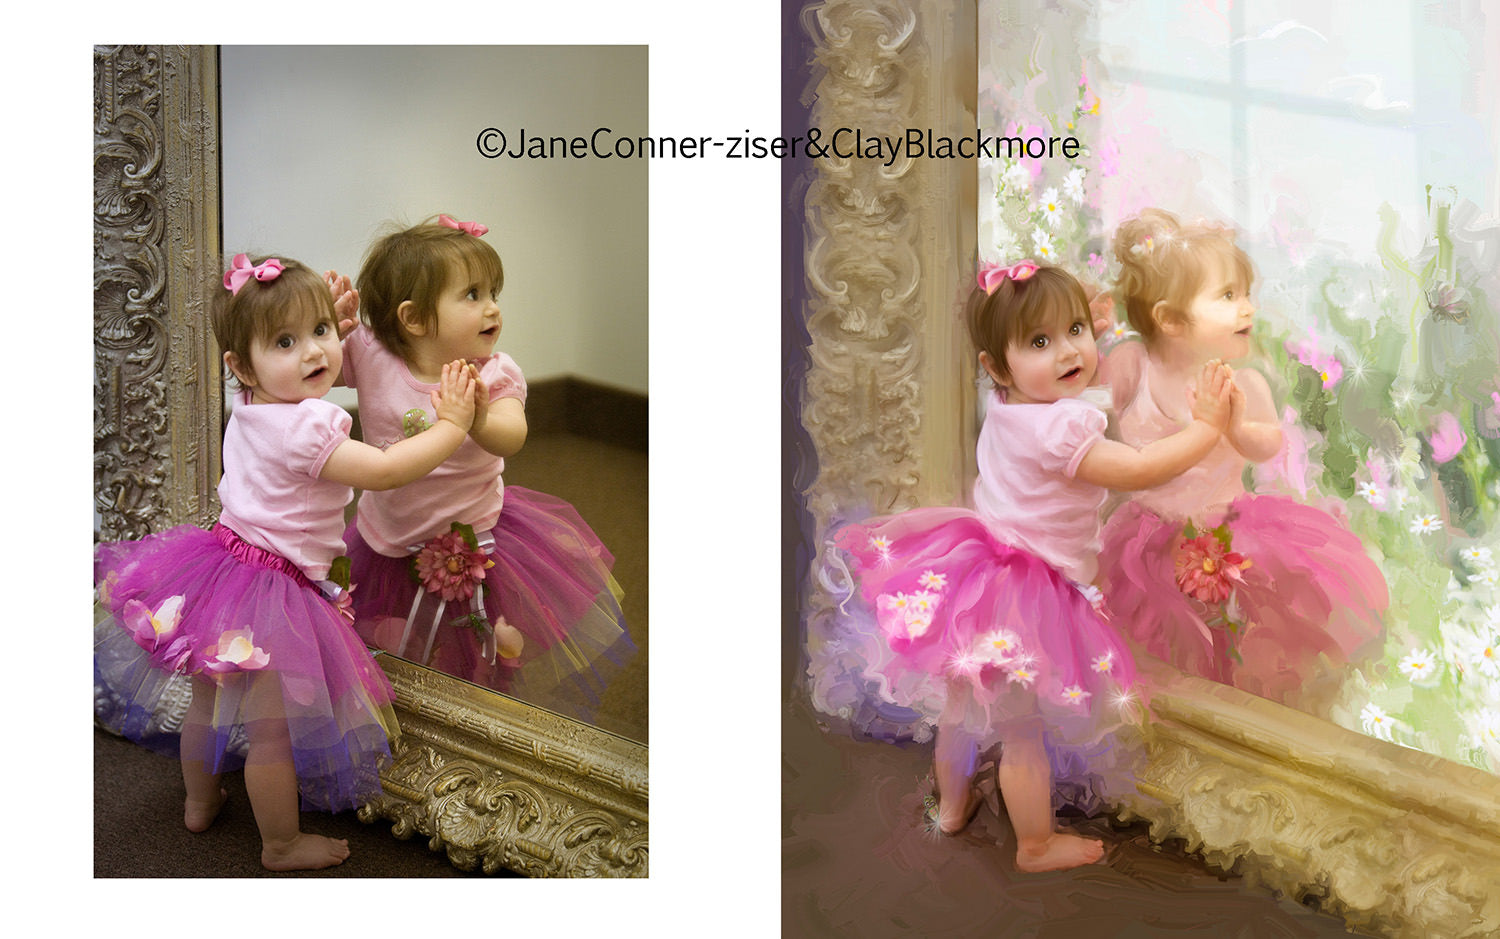 Original picture of a toddler wearing a pink tutu vs a digital version